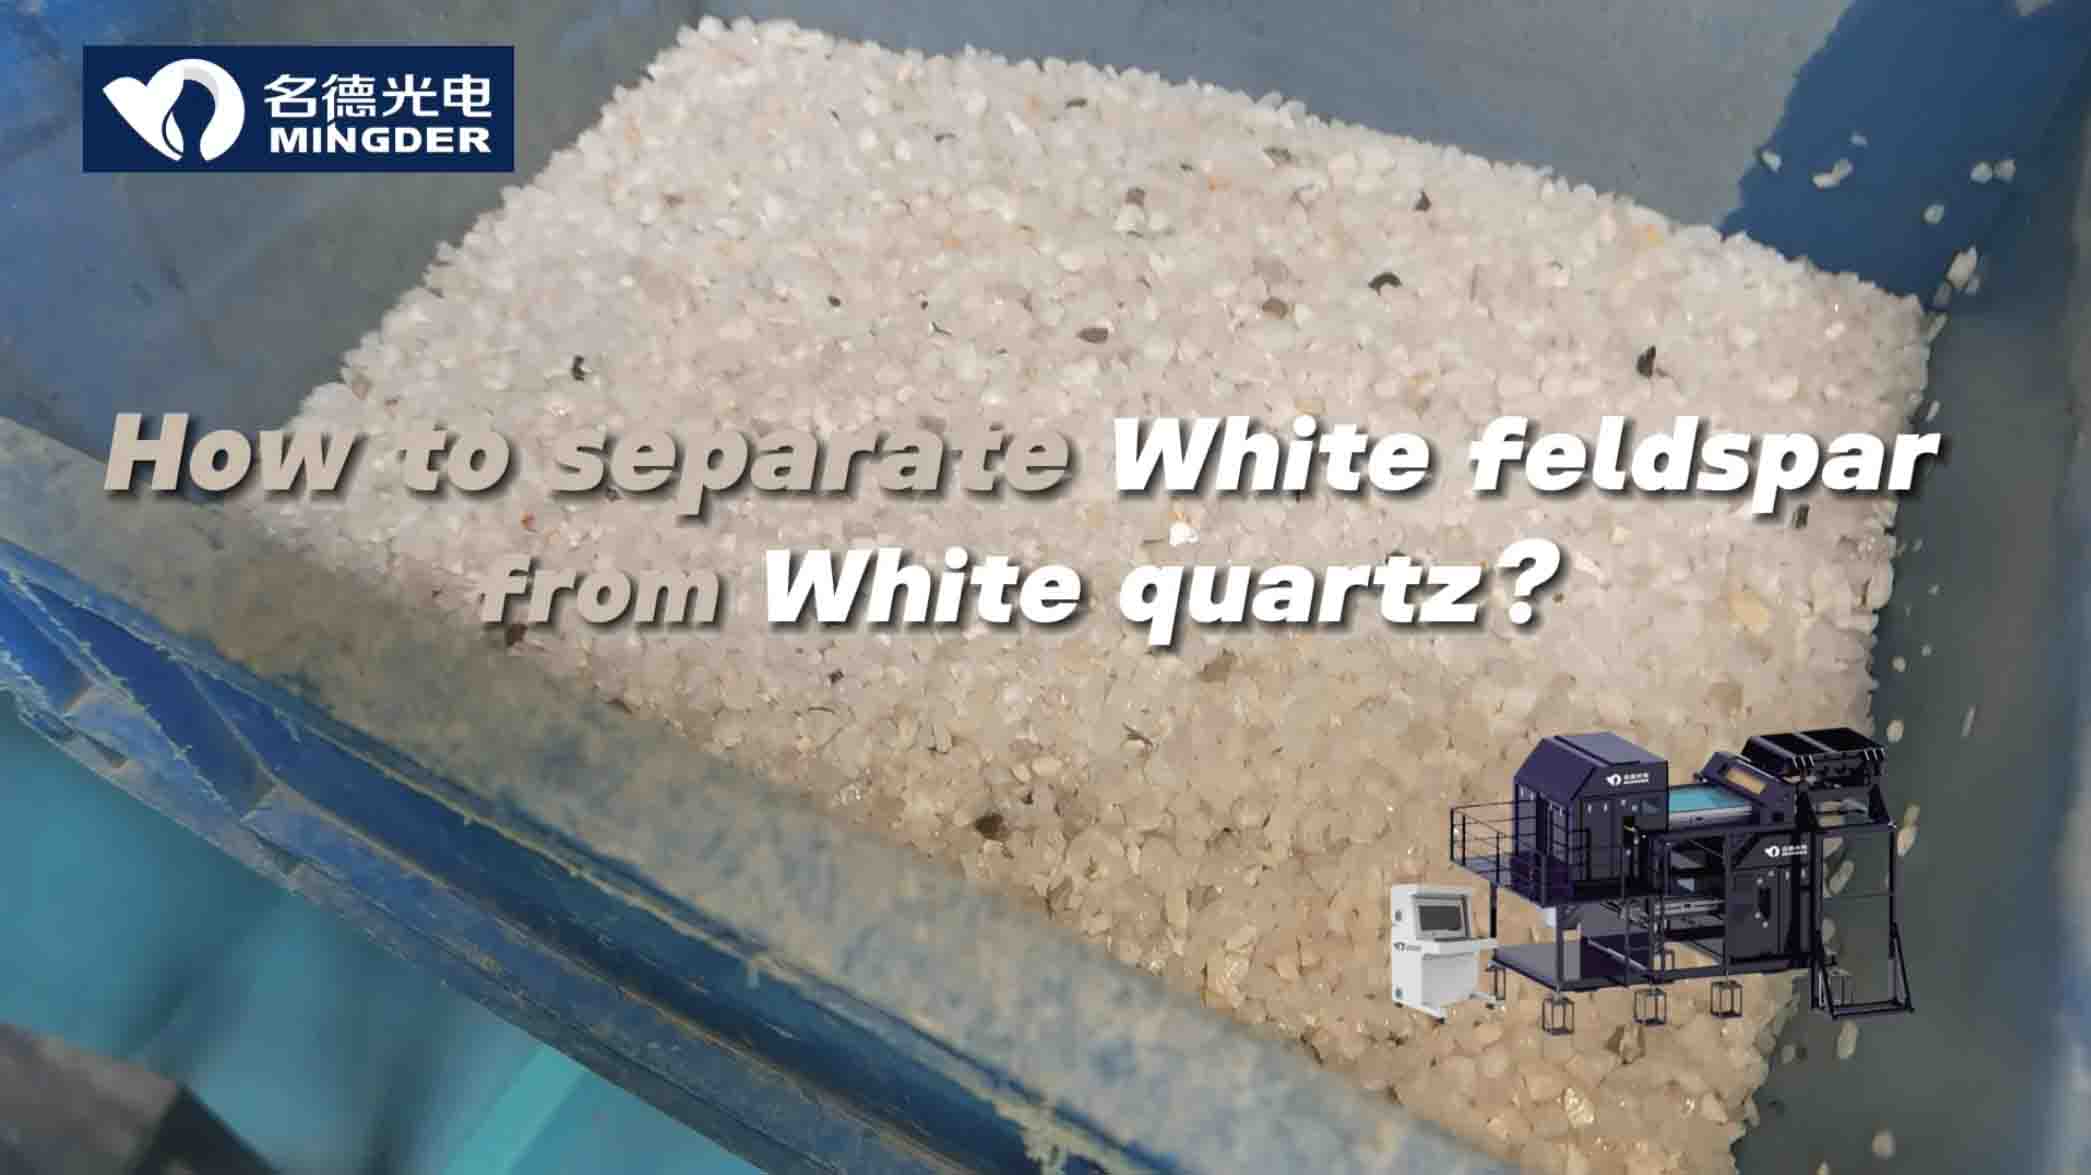 How to effectively separate feldspar and fine grain quartz?